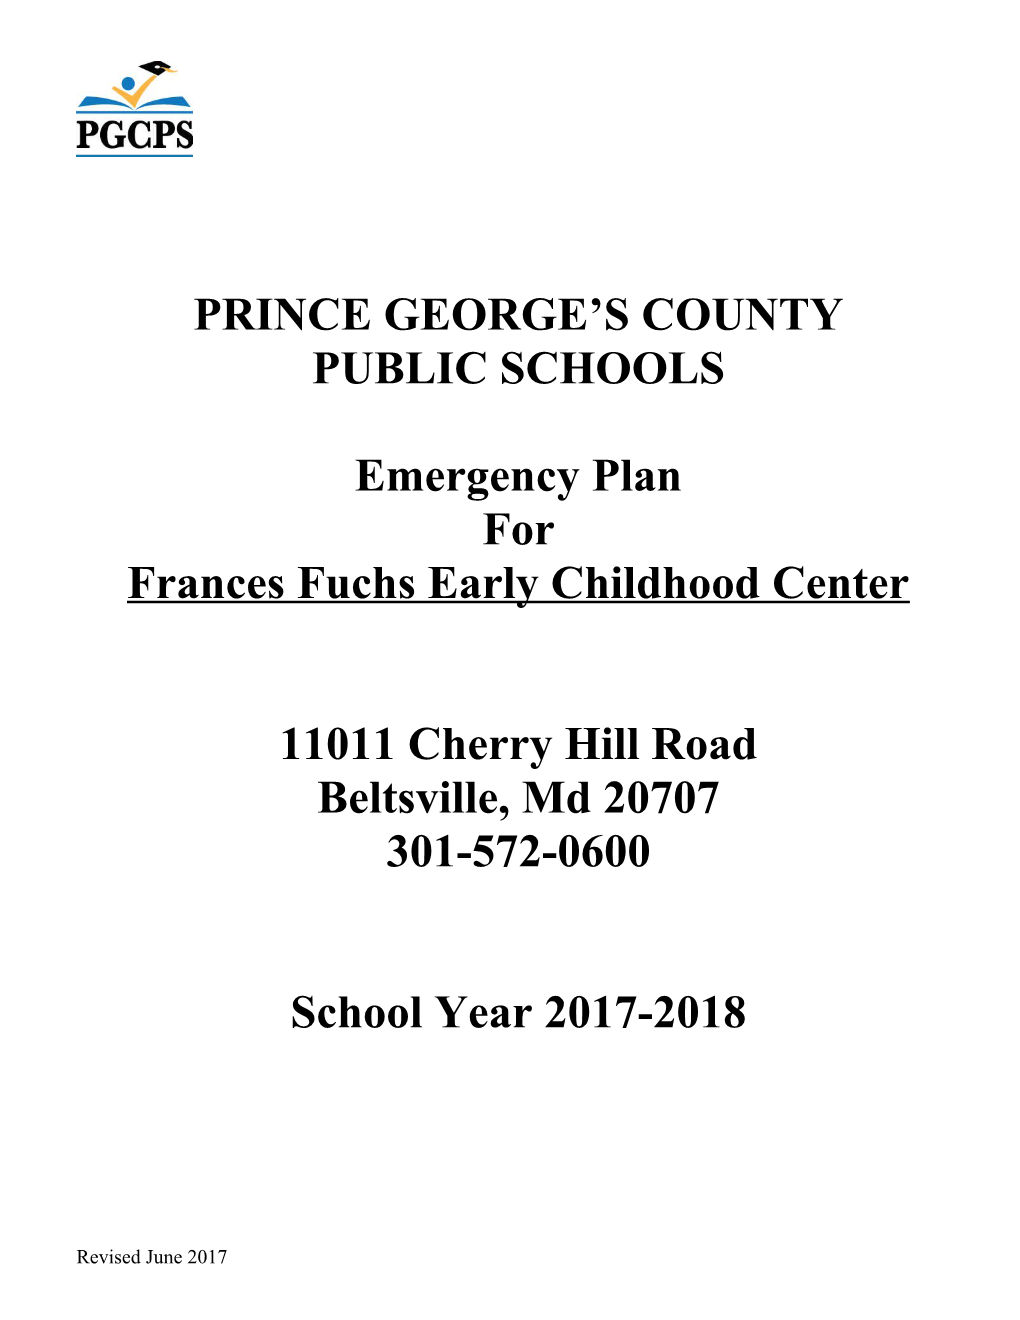 Prince George S County Public Schools Emergency Plan, 2017 2018